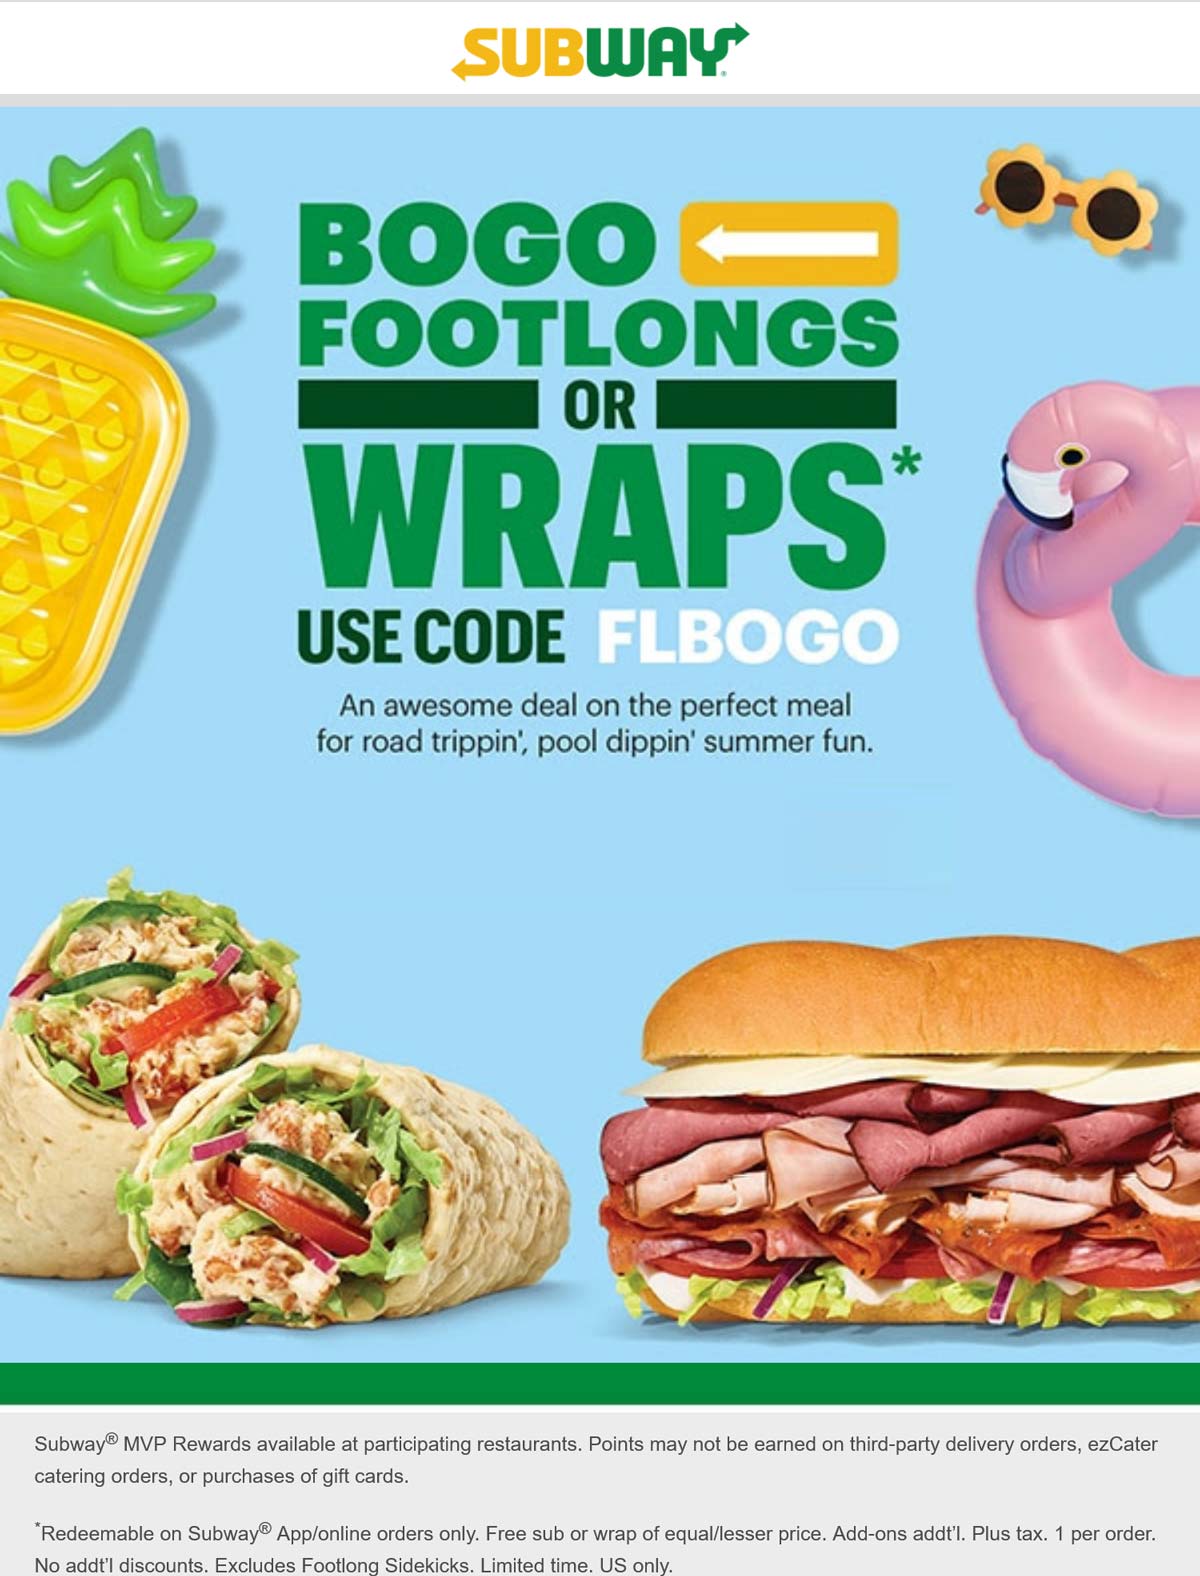 Subway restaurants Coupon  Second footlong sandwich free online at Subway via promo code FLBOGO #subway 